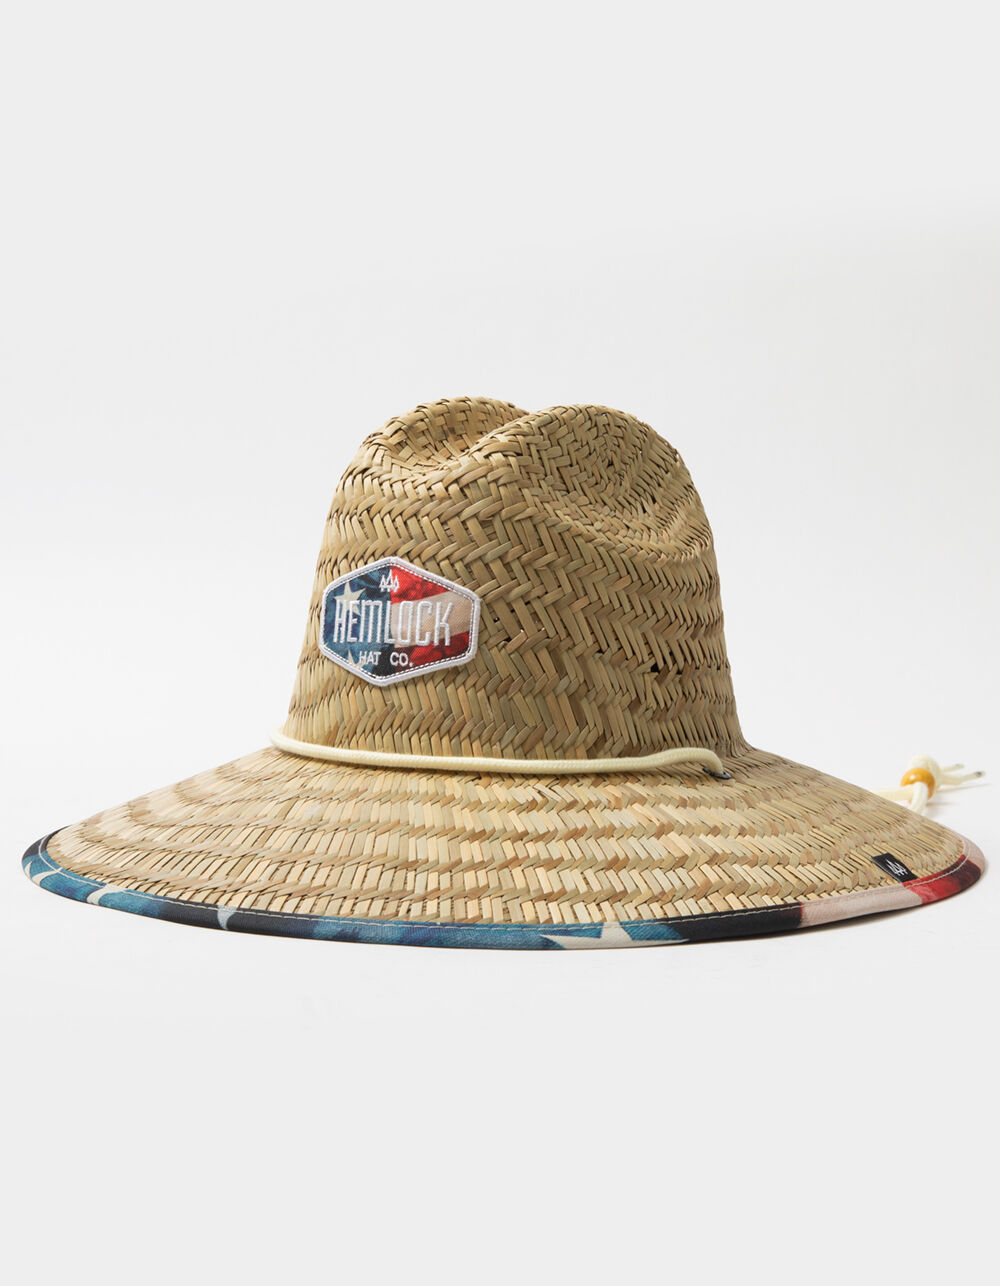 HEMLOCK HAT CO. Brave Boys Lifeguard Straw Hat